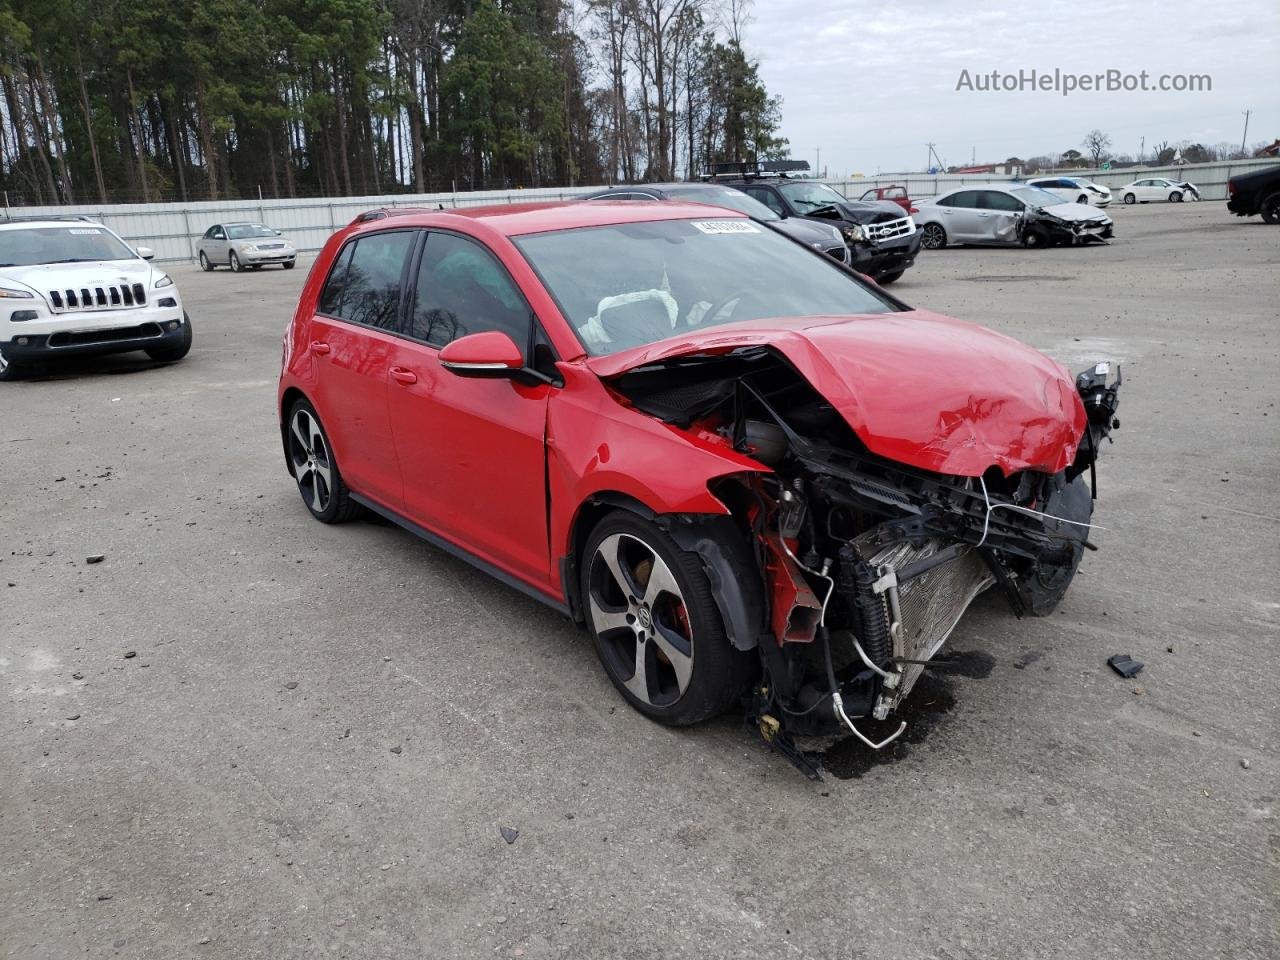 2018 Volkswagen Gti S Red vin: 3VW547AU5JM265805